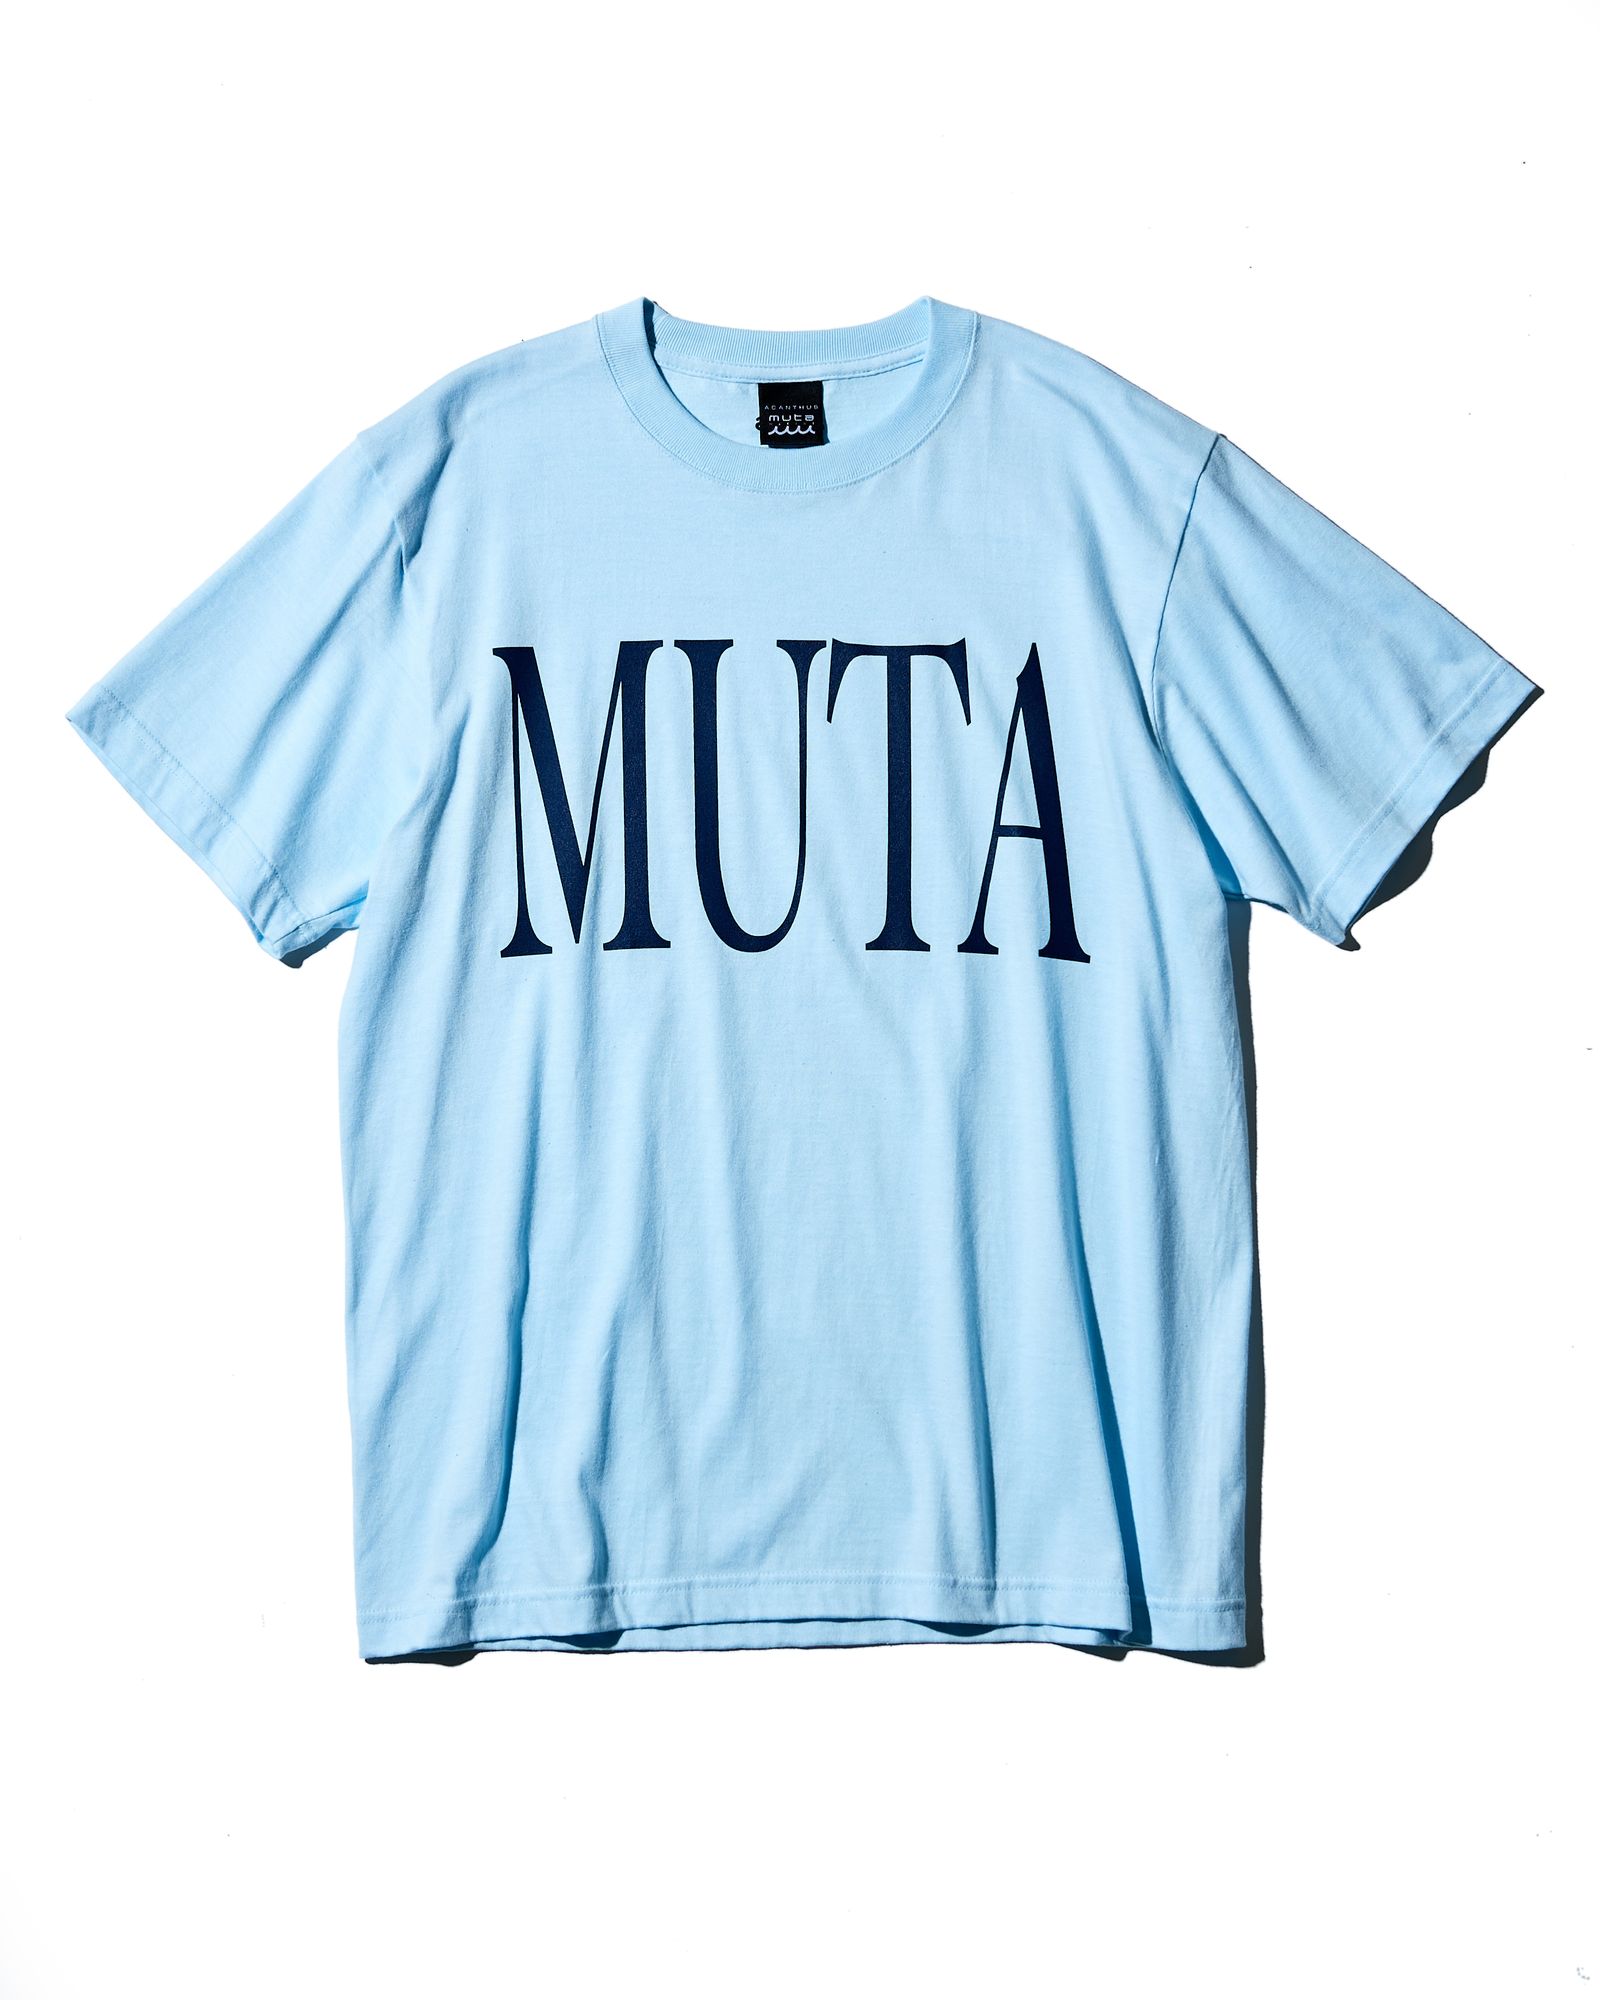 ACANTHUS x muta MARINE / muta BIG Logo Tee / ロゴプリントTシャツ / LIGHT BLUE /  MA2413 - S